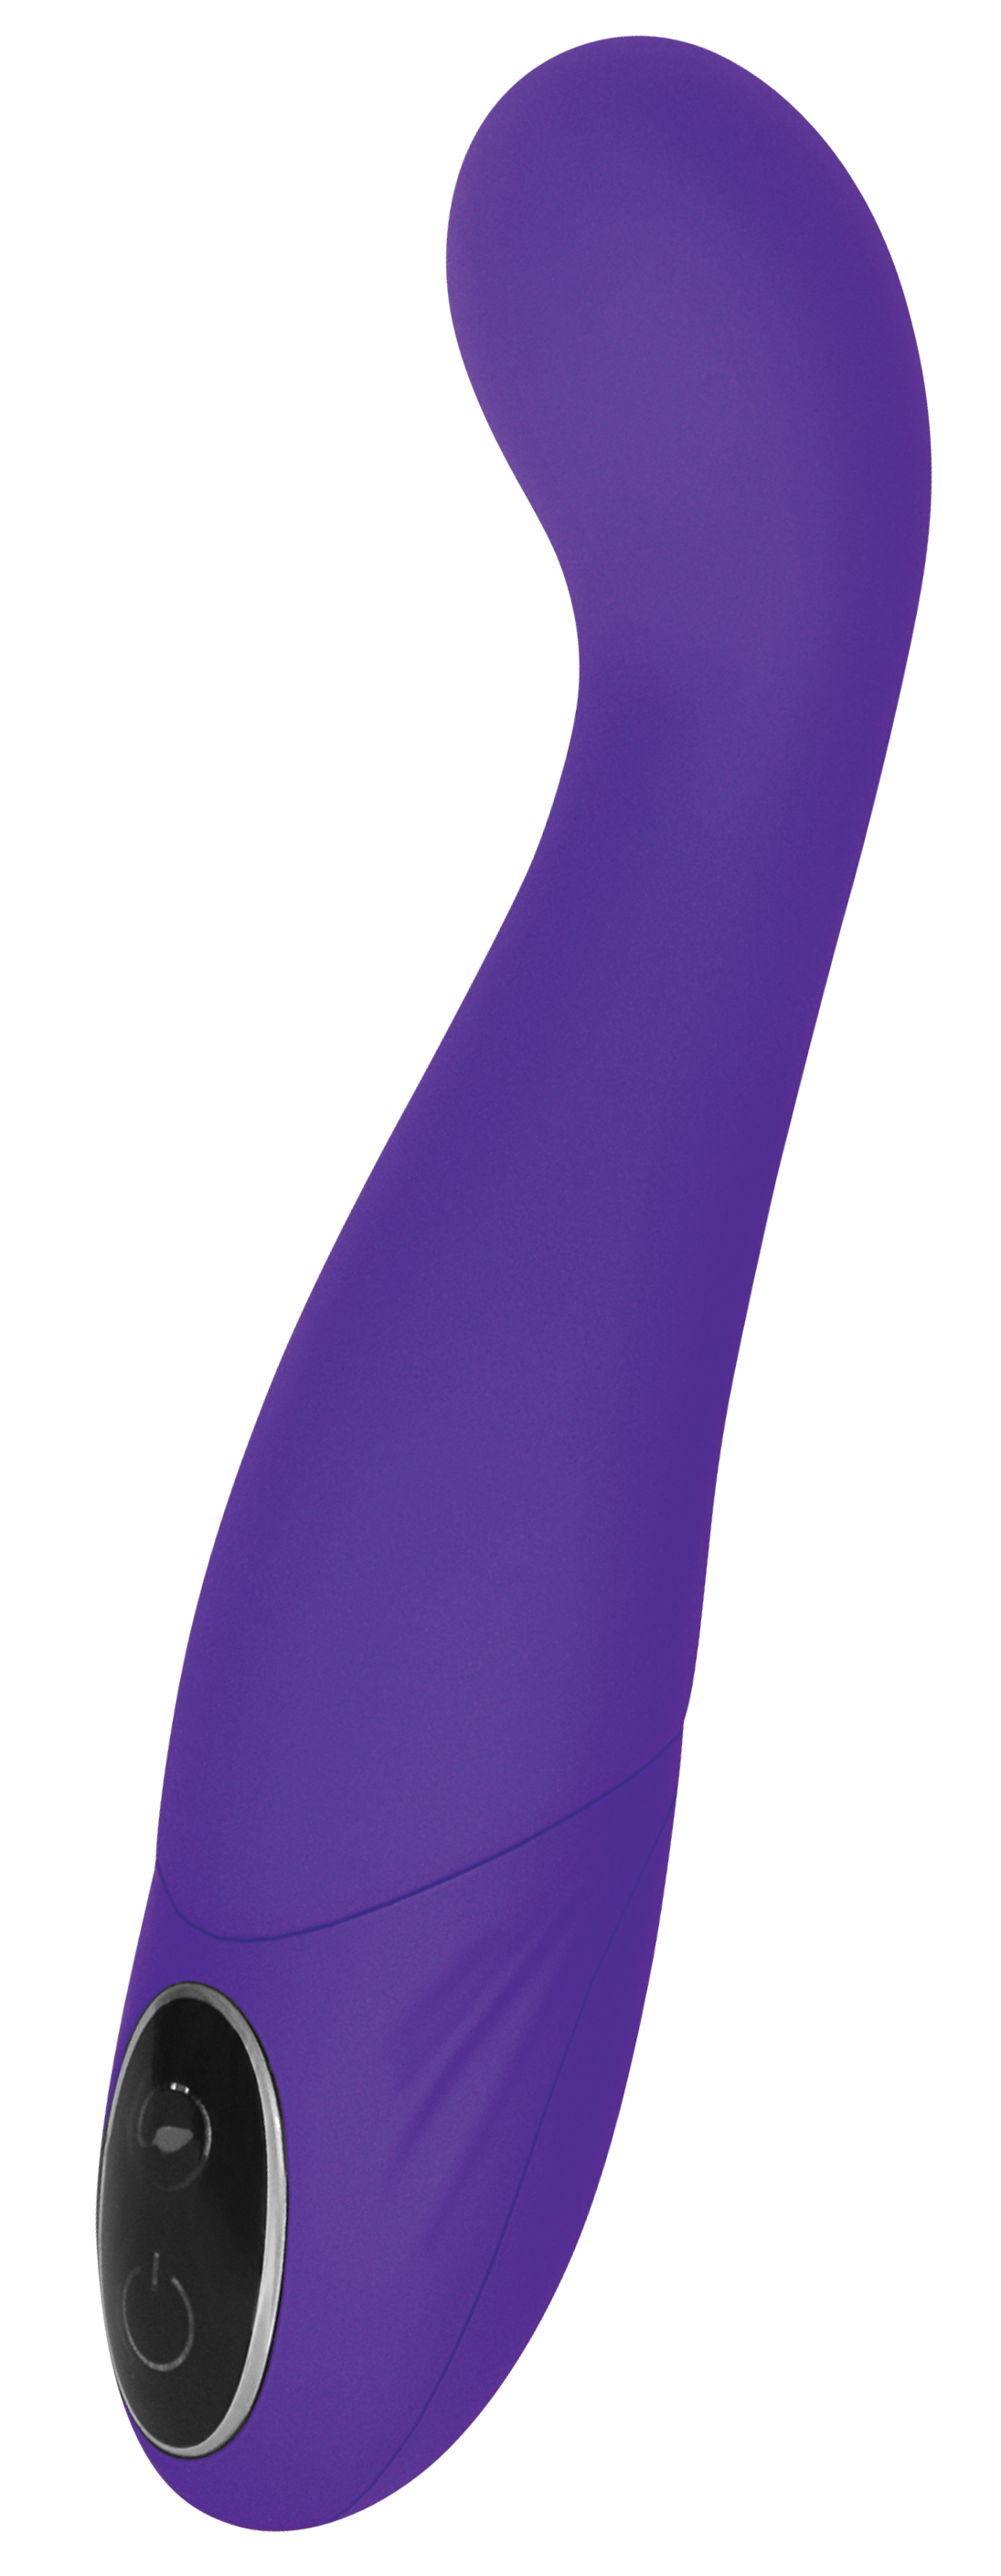 Sincerely Lavender 10 Function Vibrator